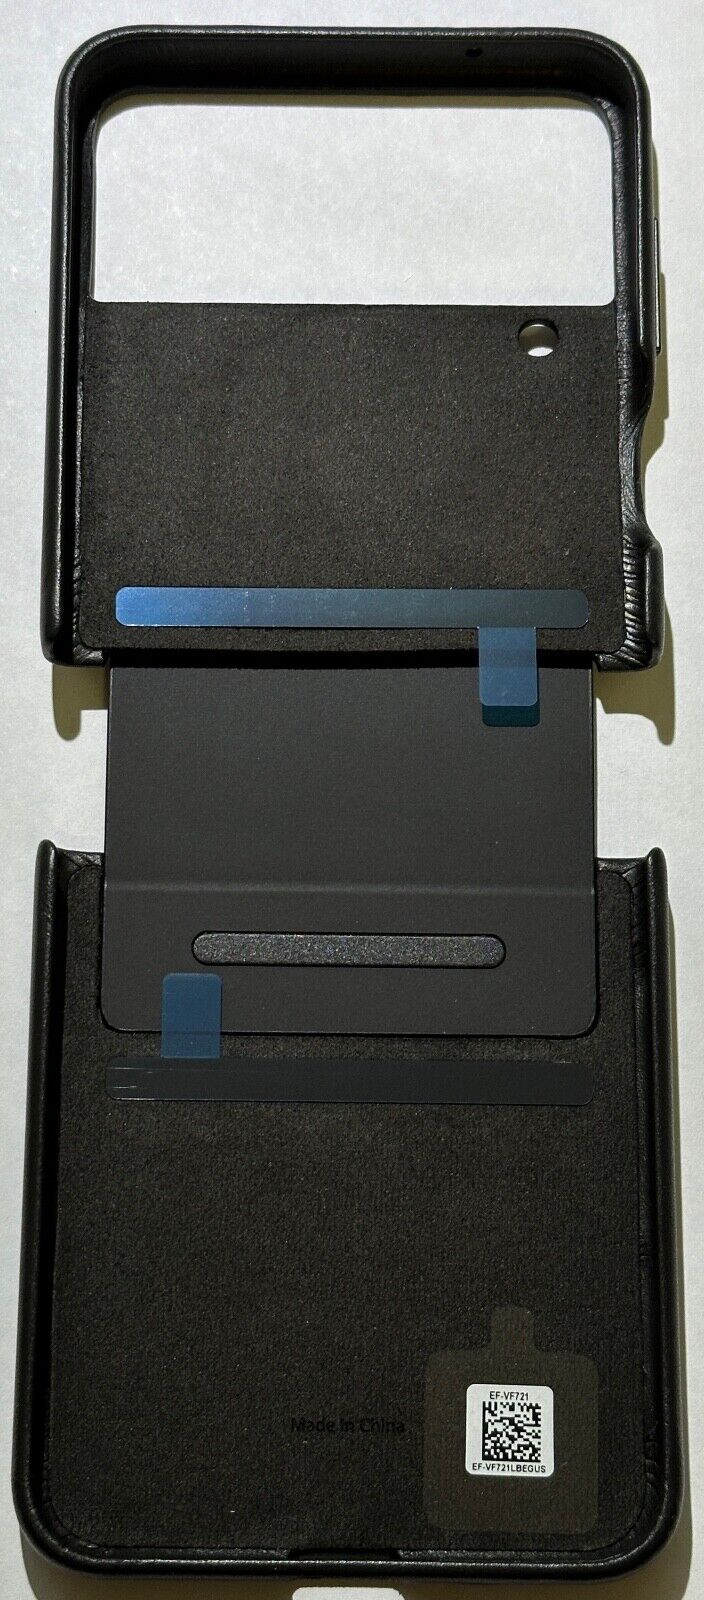 Genuine Samsung Flap Leather Cover for Galaxy Z Flip4 EF-VF721LBEGUS - Black VG